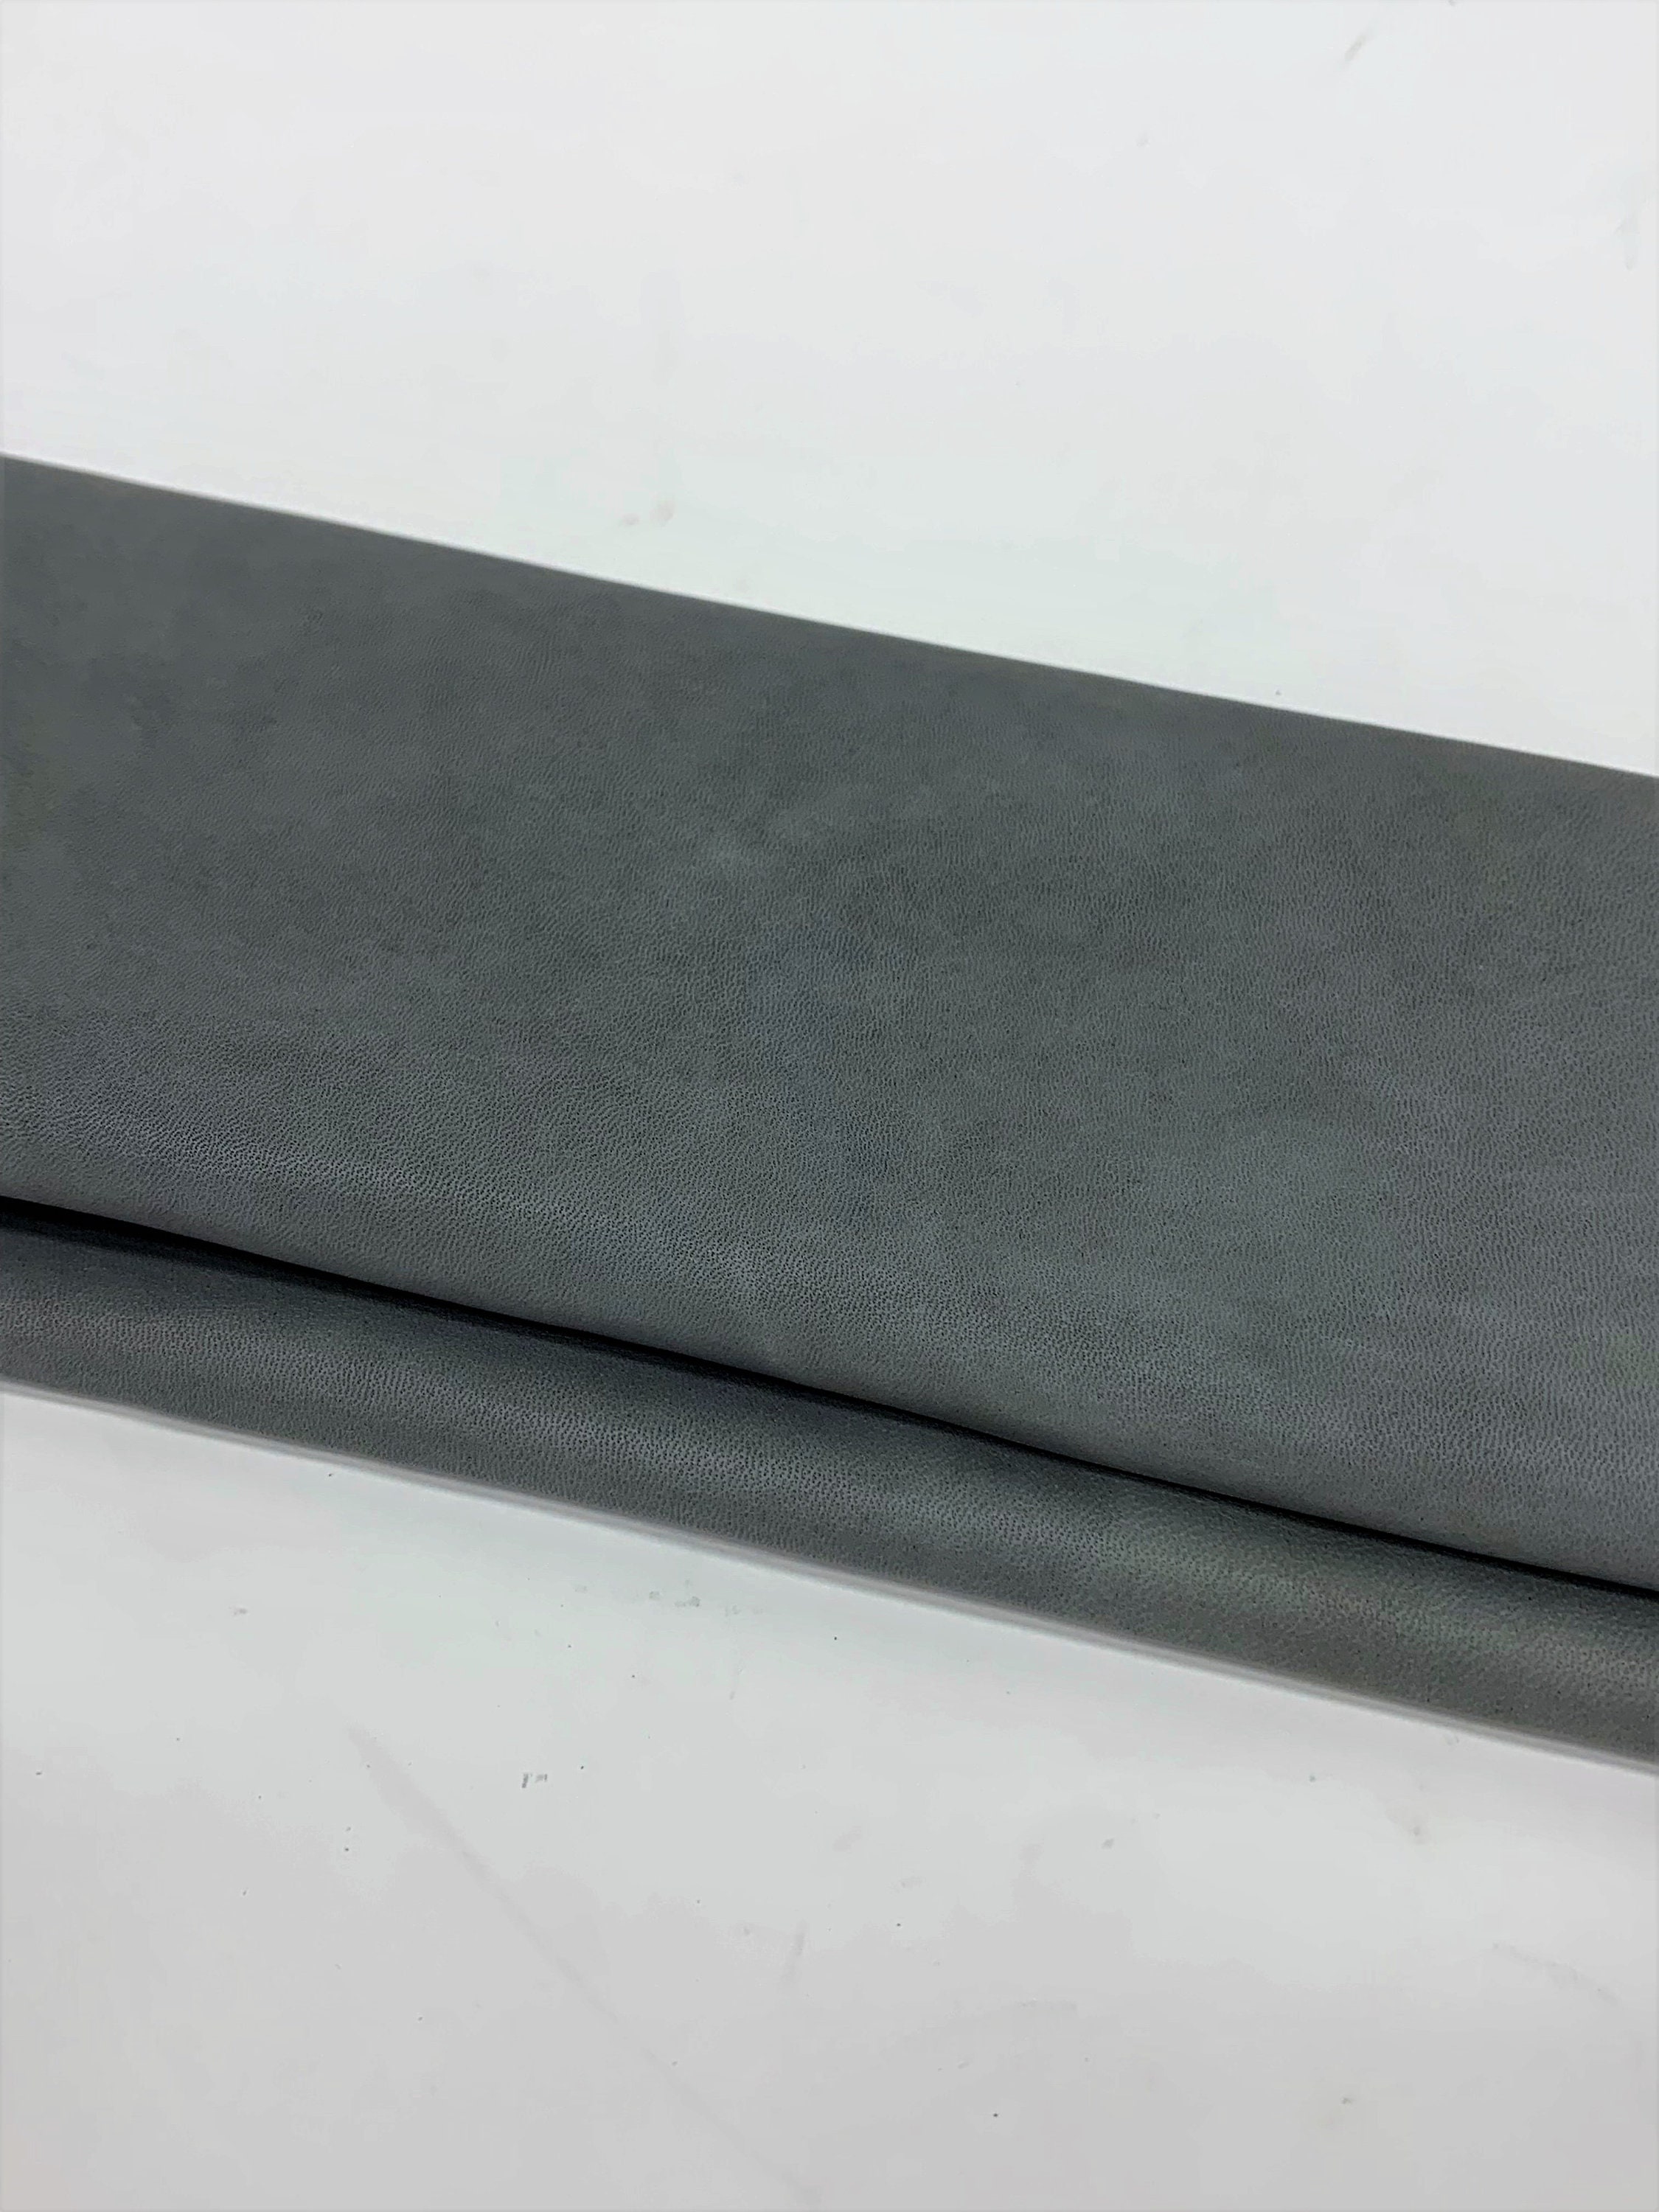 Sheep Nappa Leather Dark Denim 0.4-0.6 mm 7 Sq ft Ultra Soft Glove Quality 